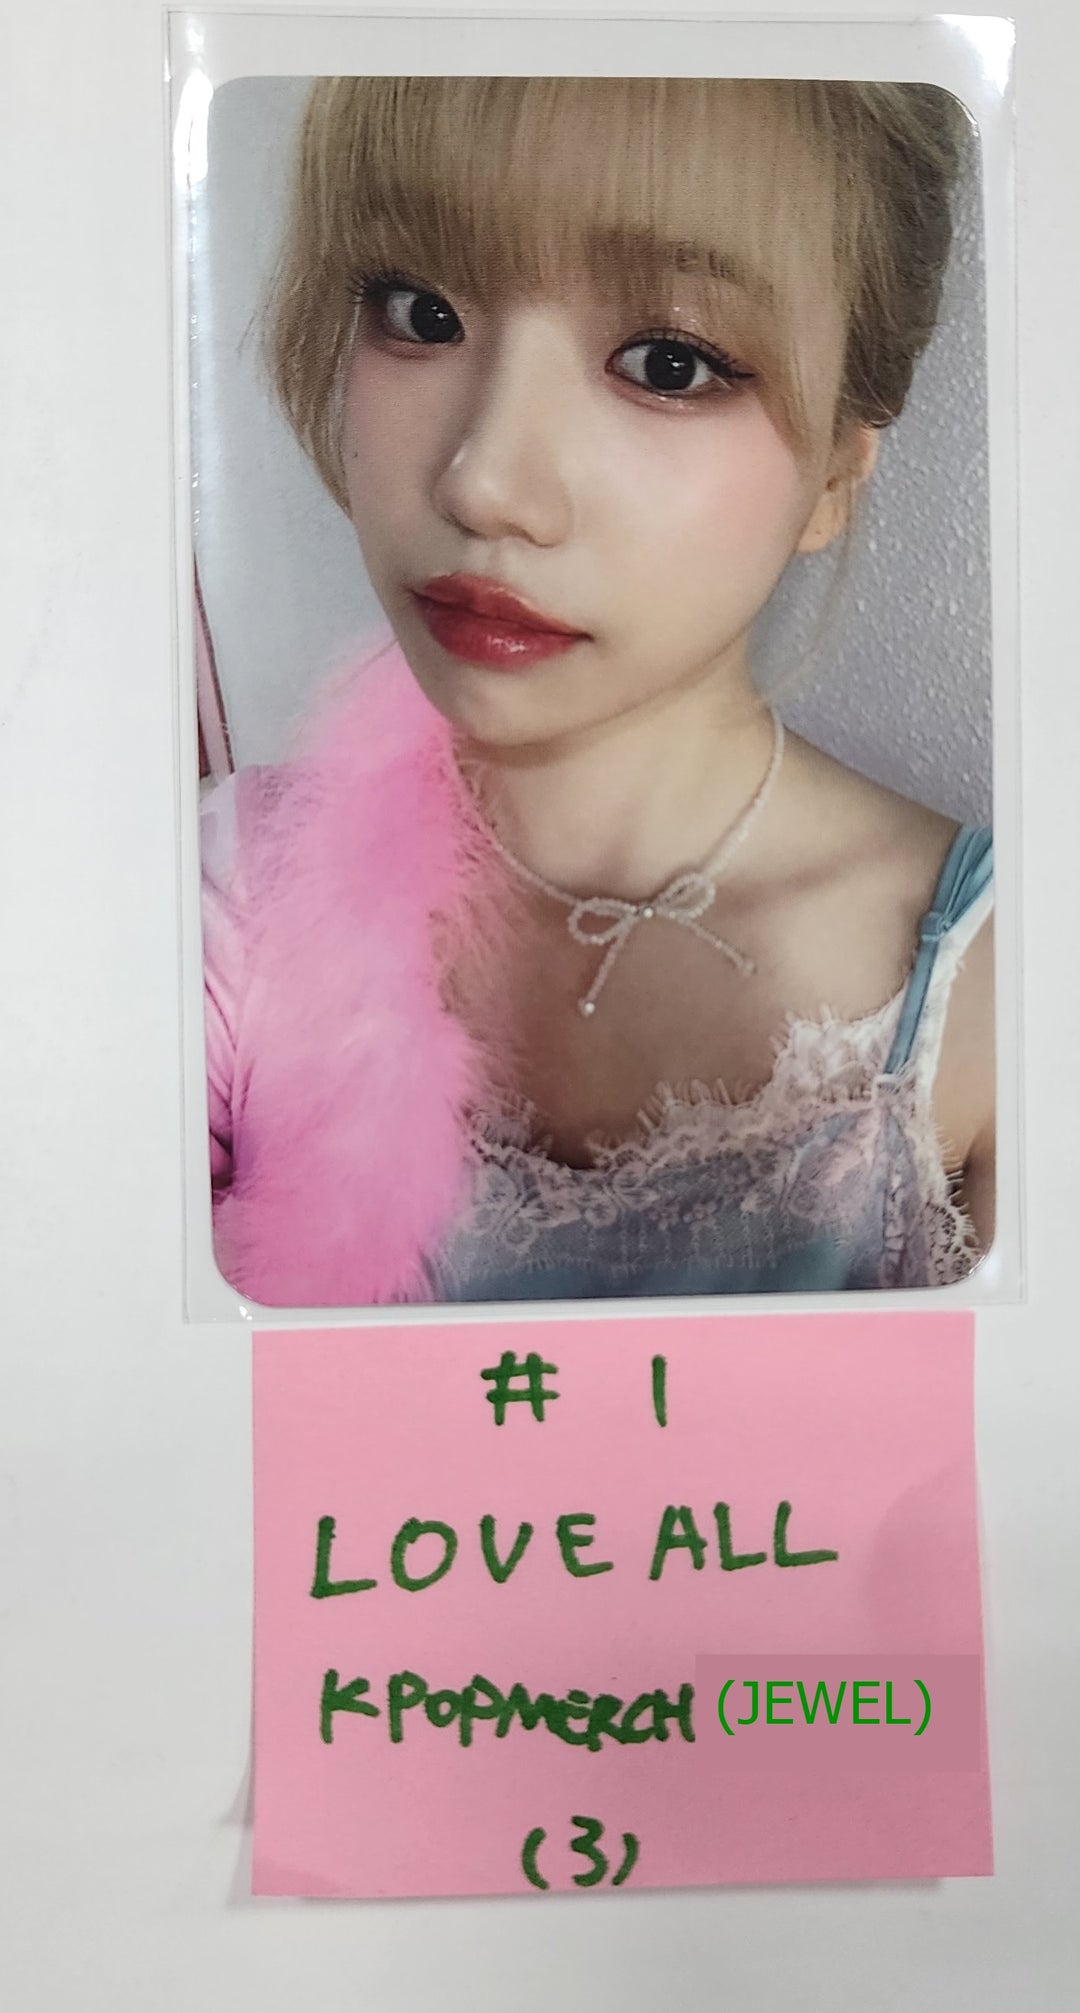 JO YURI "Love All" - KPOP MERCH Fansign Event Photocard [Jewel Ver] [23.08.29]